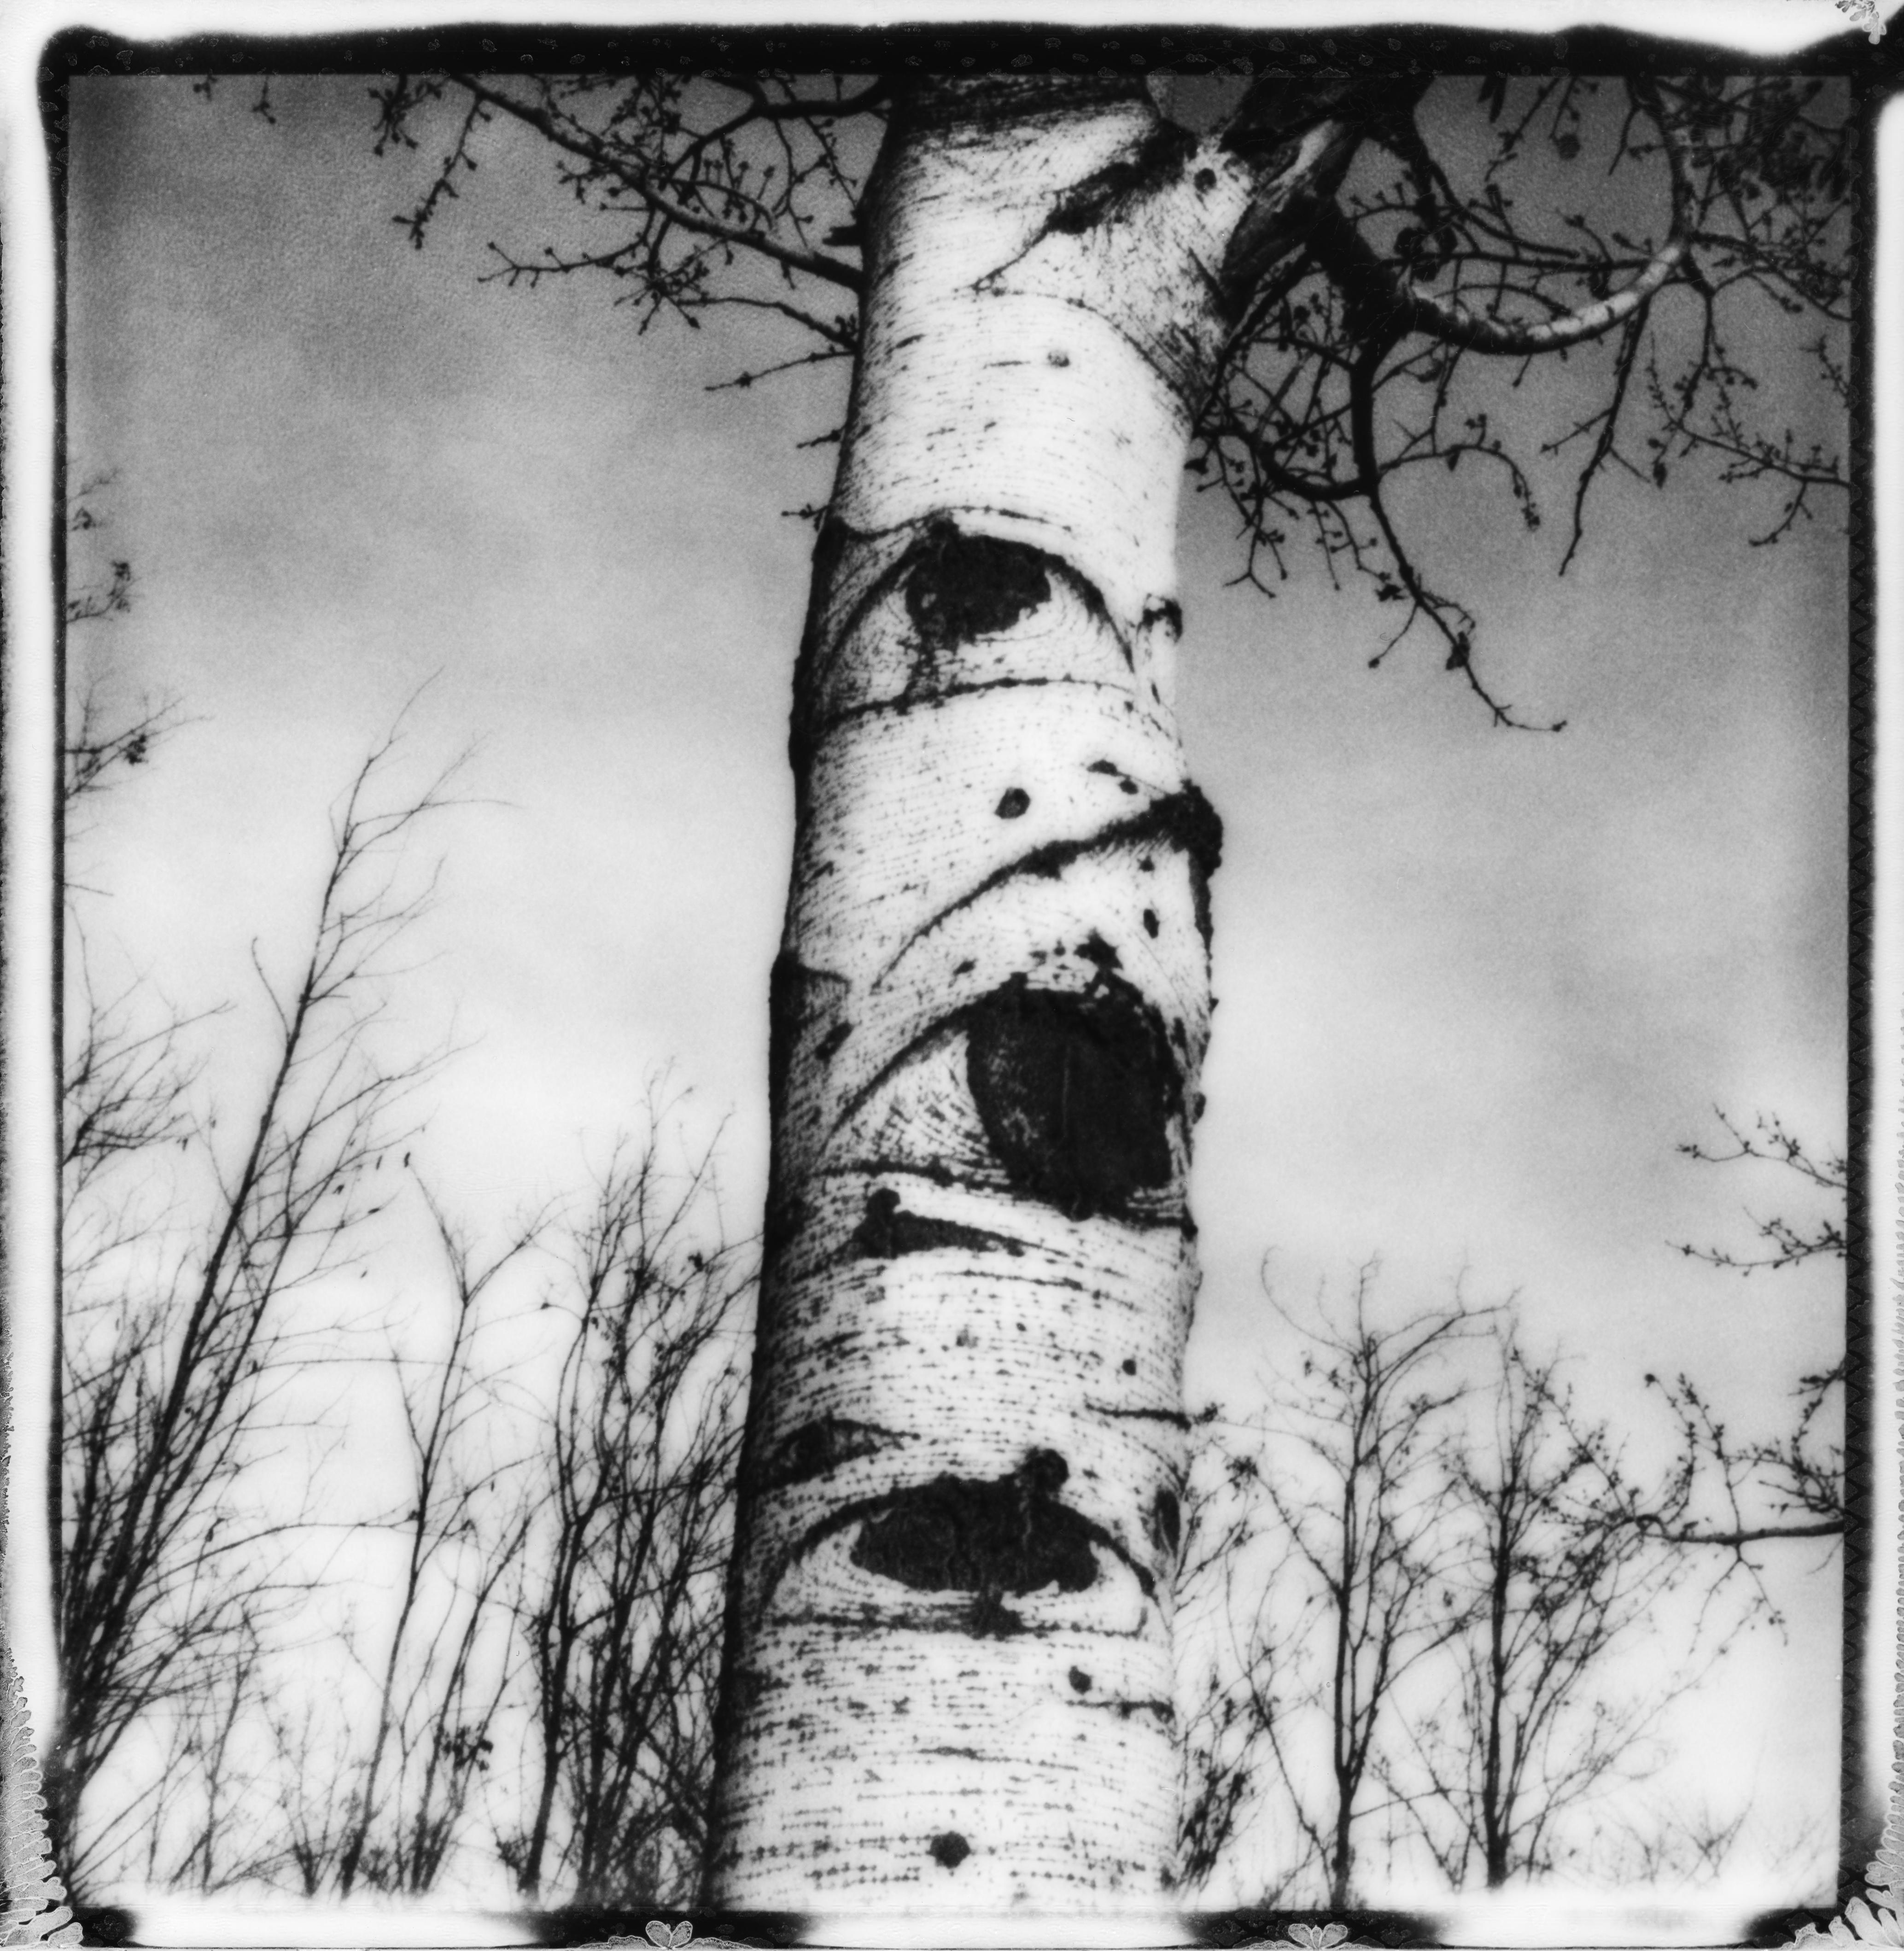 Ugne Pouwell Landscape Photograph - 'Eyed Birtch' - black and white polaroid still life photography